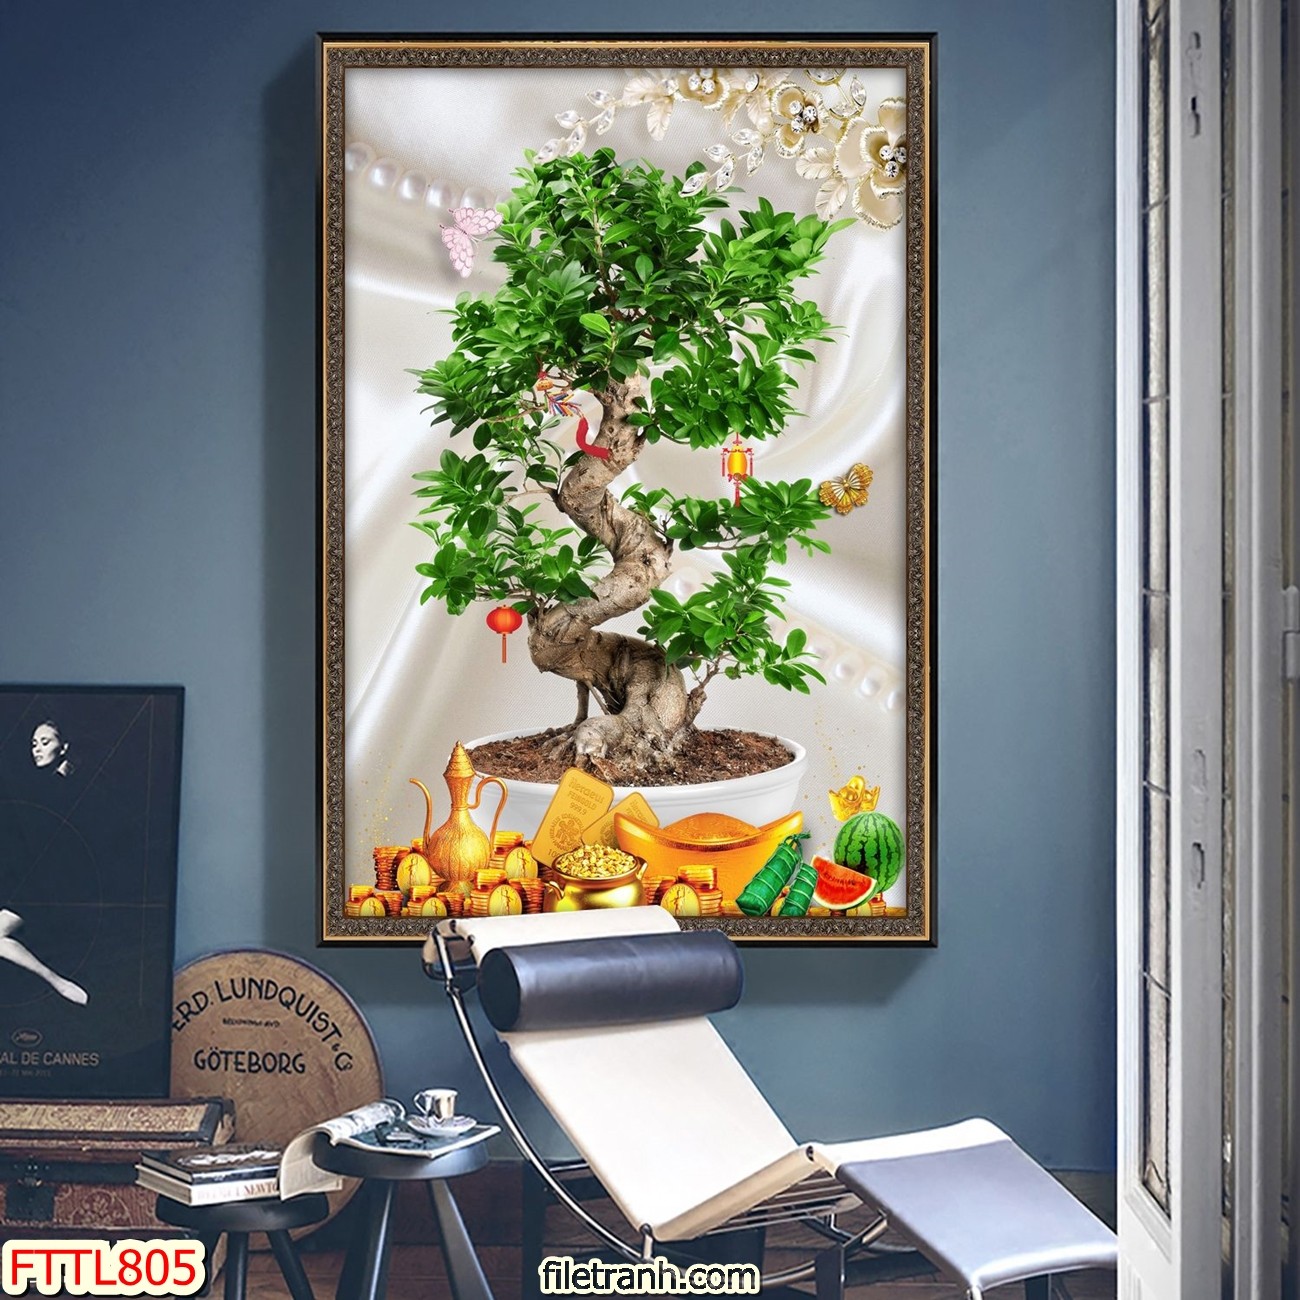 https://filetranh.com/file-tranh-chau-mai-bonsai/file-tranh-chau-mai-bonsai-fttl805.html